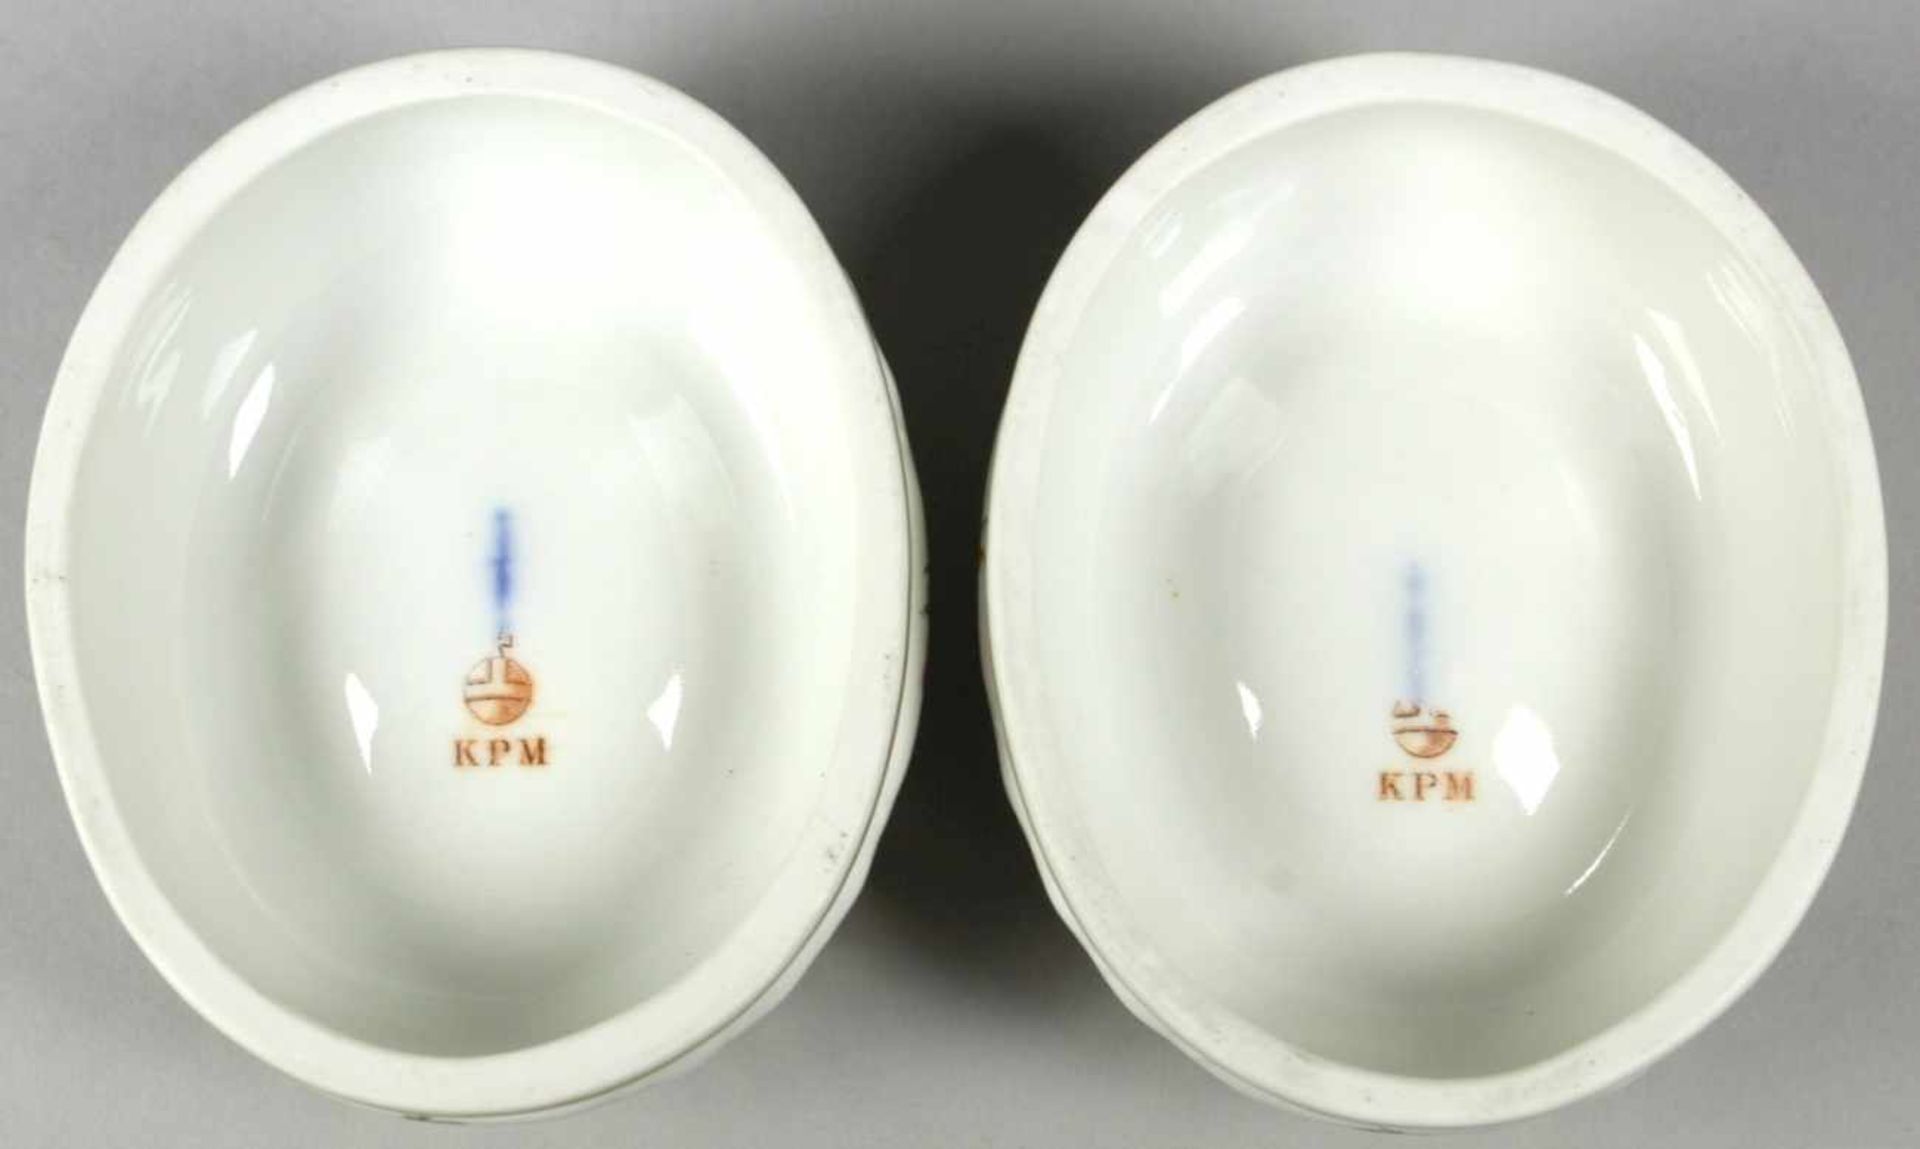 Ein Paar Porzellan-Gewürzgefäße, KPM-Berlin, 20. Jh., ovale, gemuldete Form, Reliefdekor,polychrom - Bild 2 aus 2